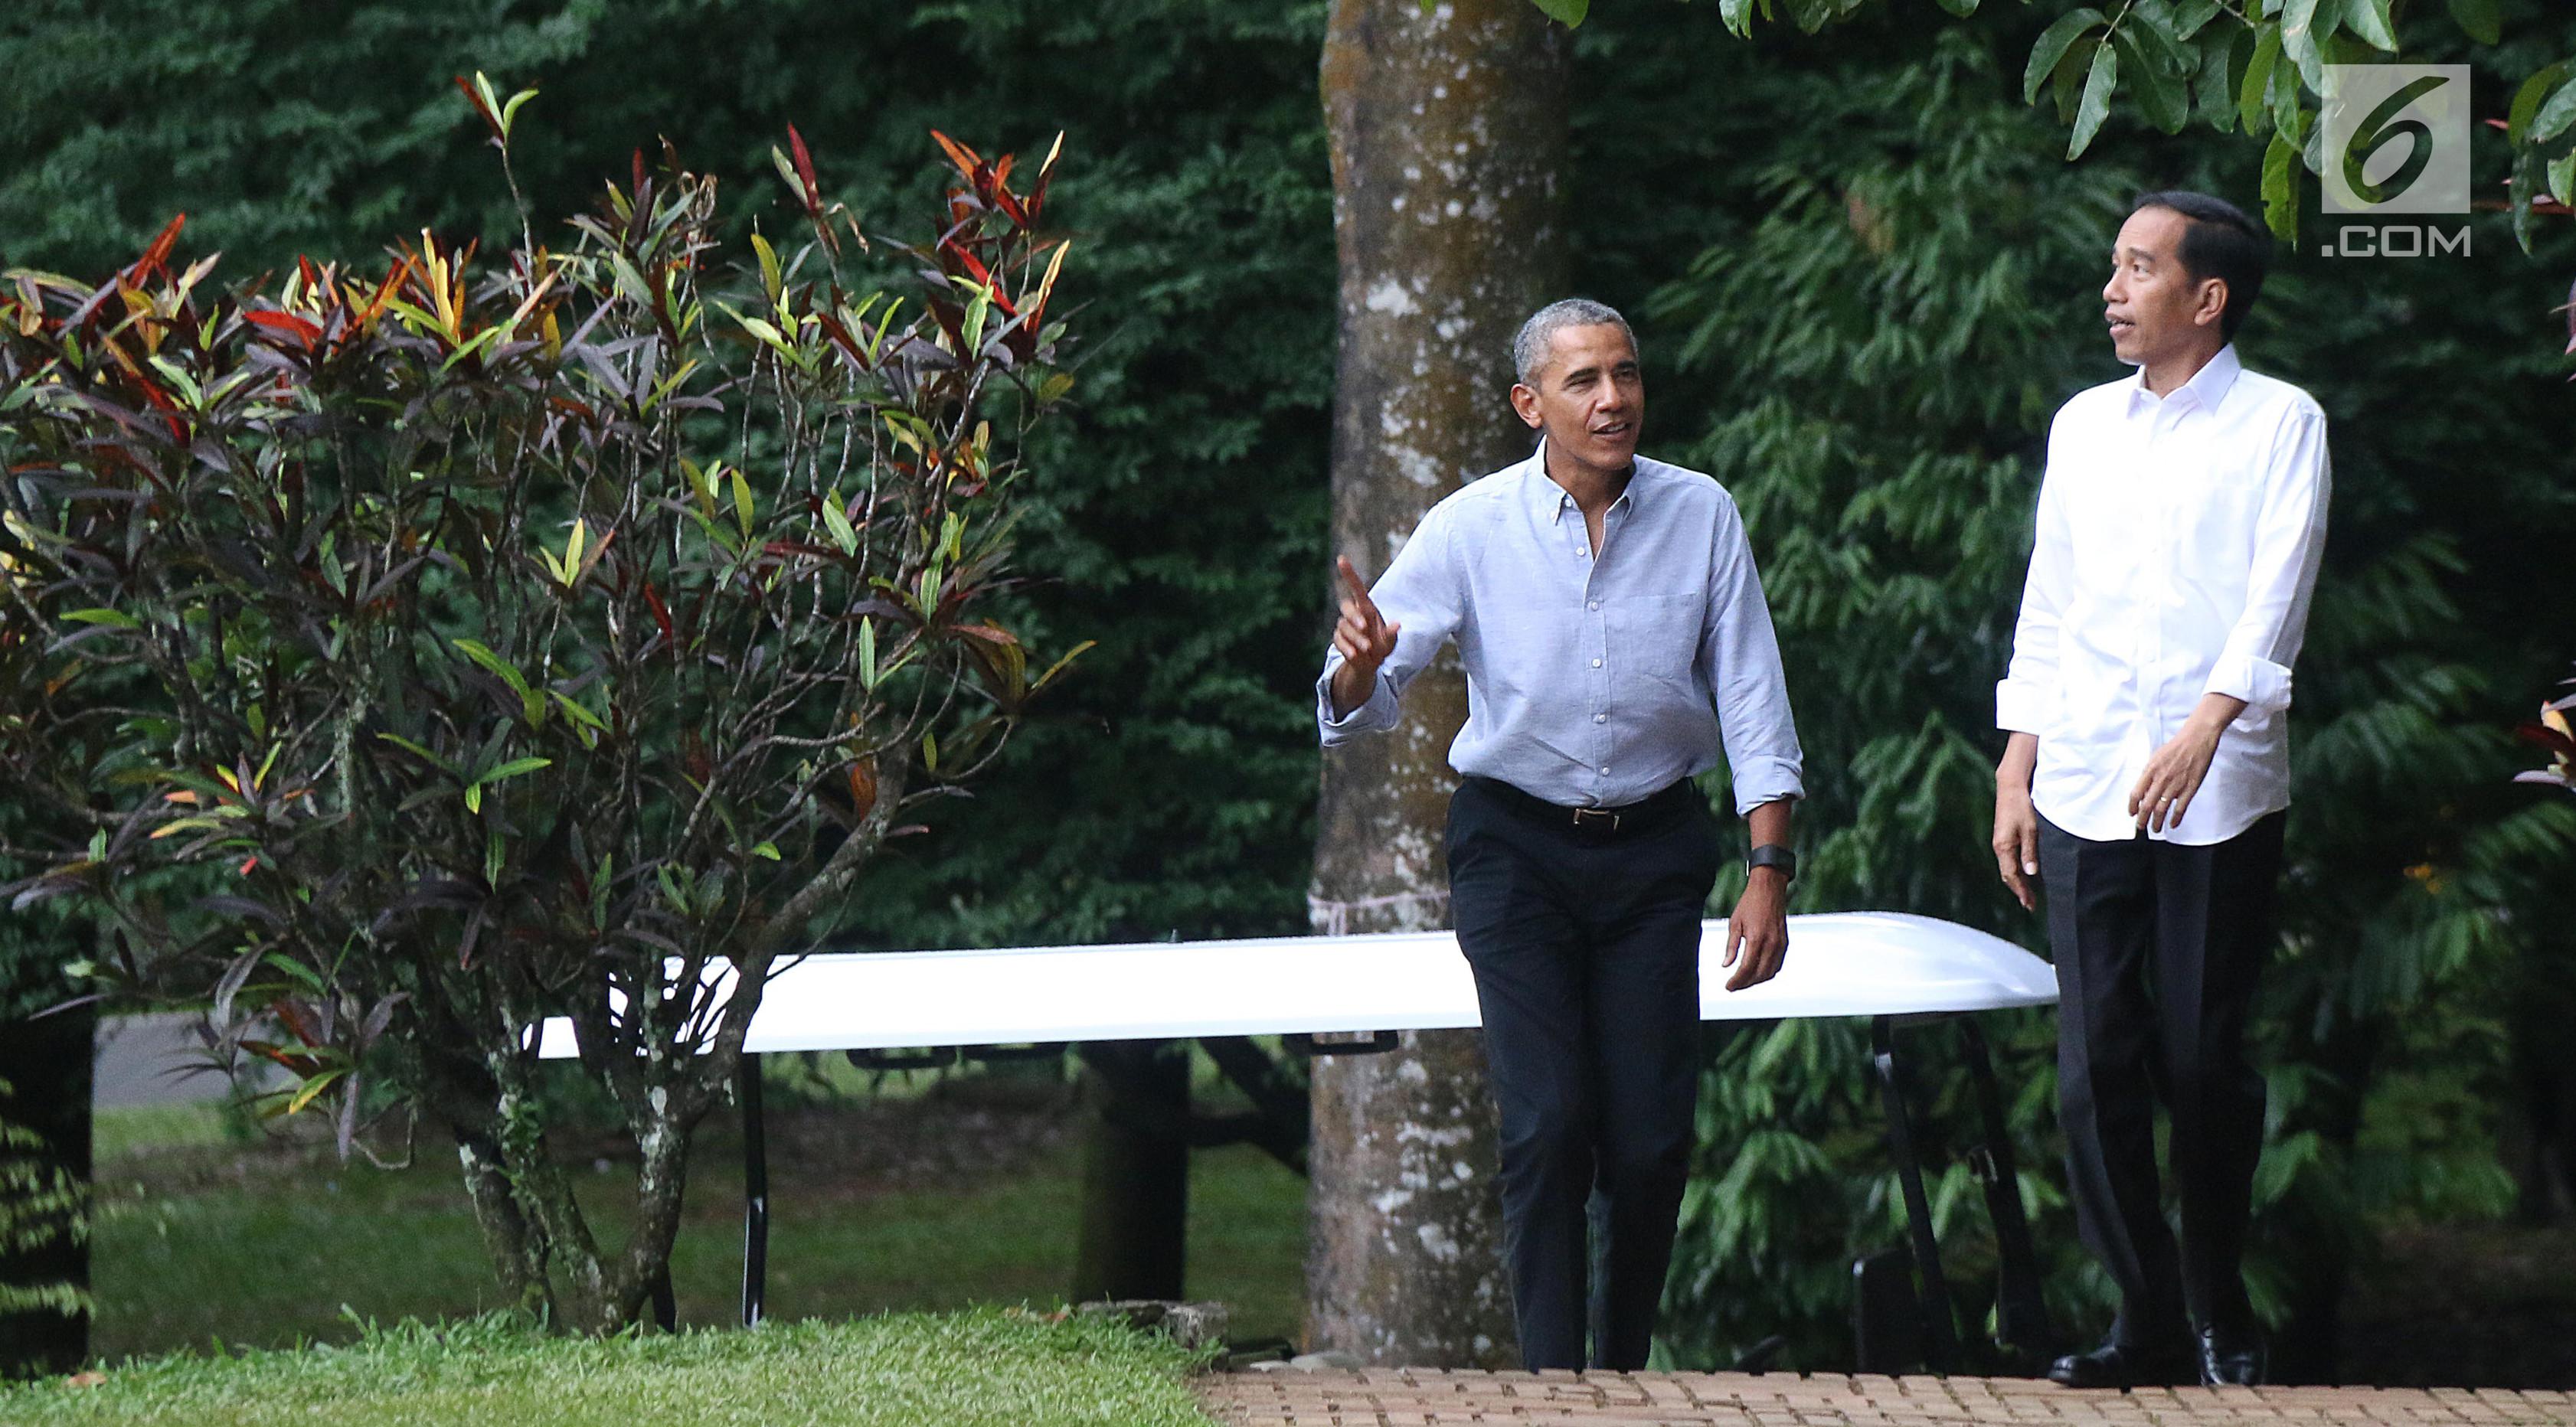 Presiden Joko Widodo berbincang dengan Presiden AS ke-44, Barack Obama di Kebun Raya Bogor menuju Grand Garden, Bogor, Jumat (29/6). Jokowi mengajak Obama berkeliling Kebun Raya untuk berbincang santai di Grand Garden. (liputan6.com/Angga Yuniar)